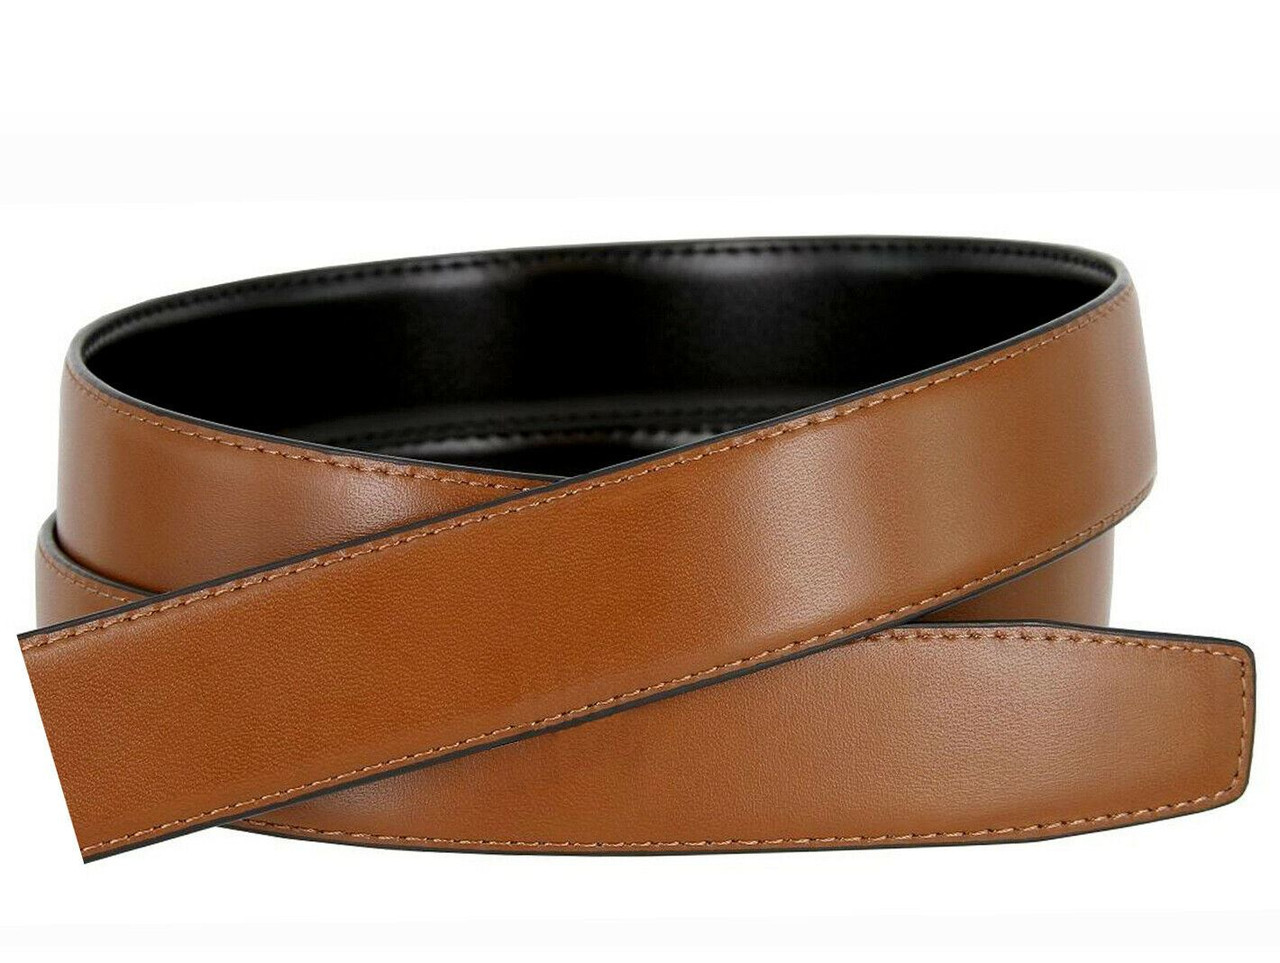 Mesh Leather Belt 30mm width